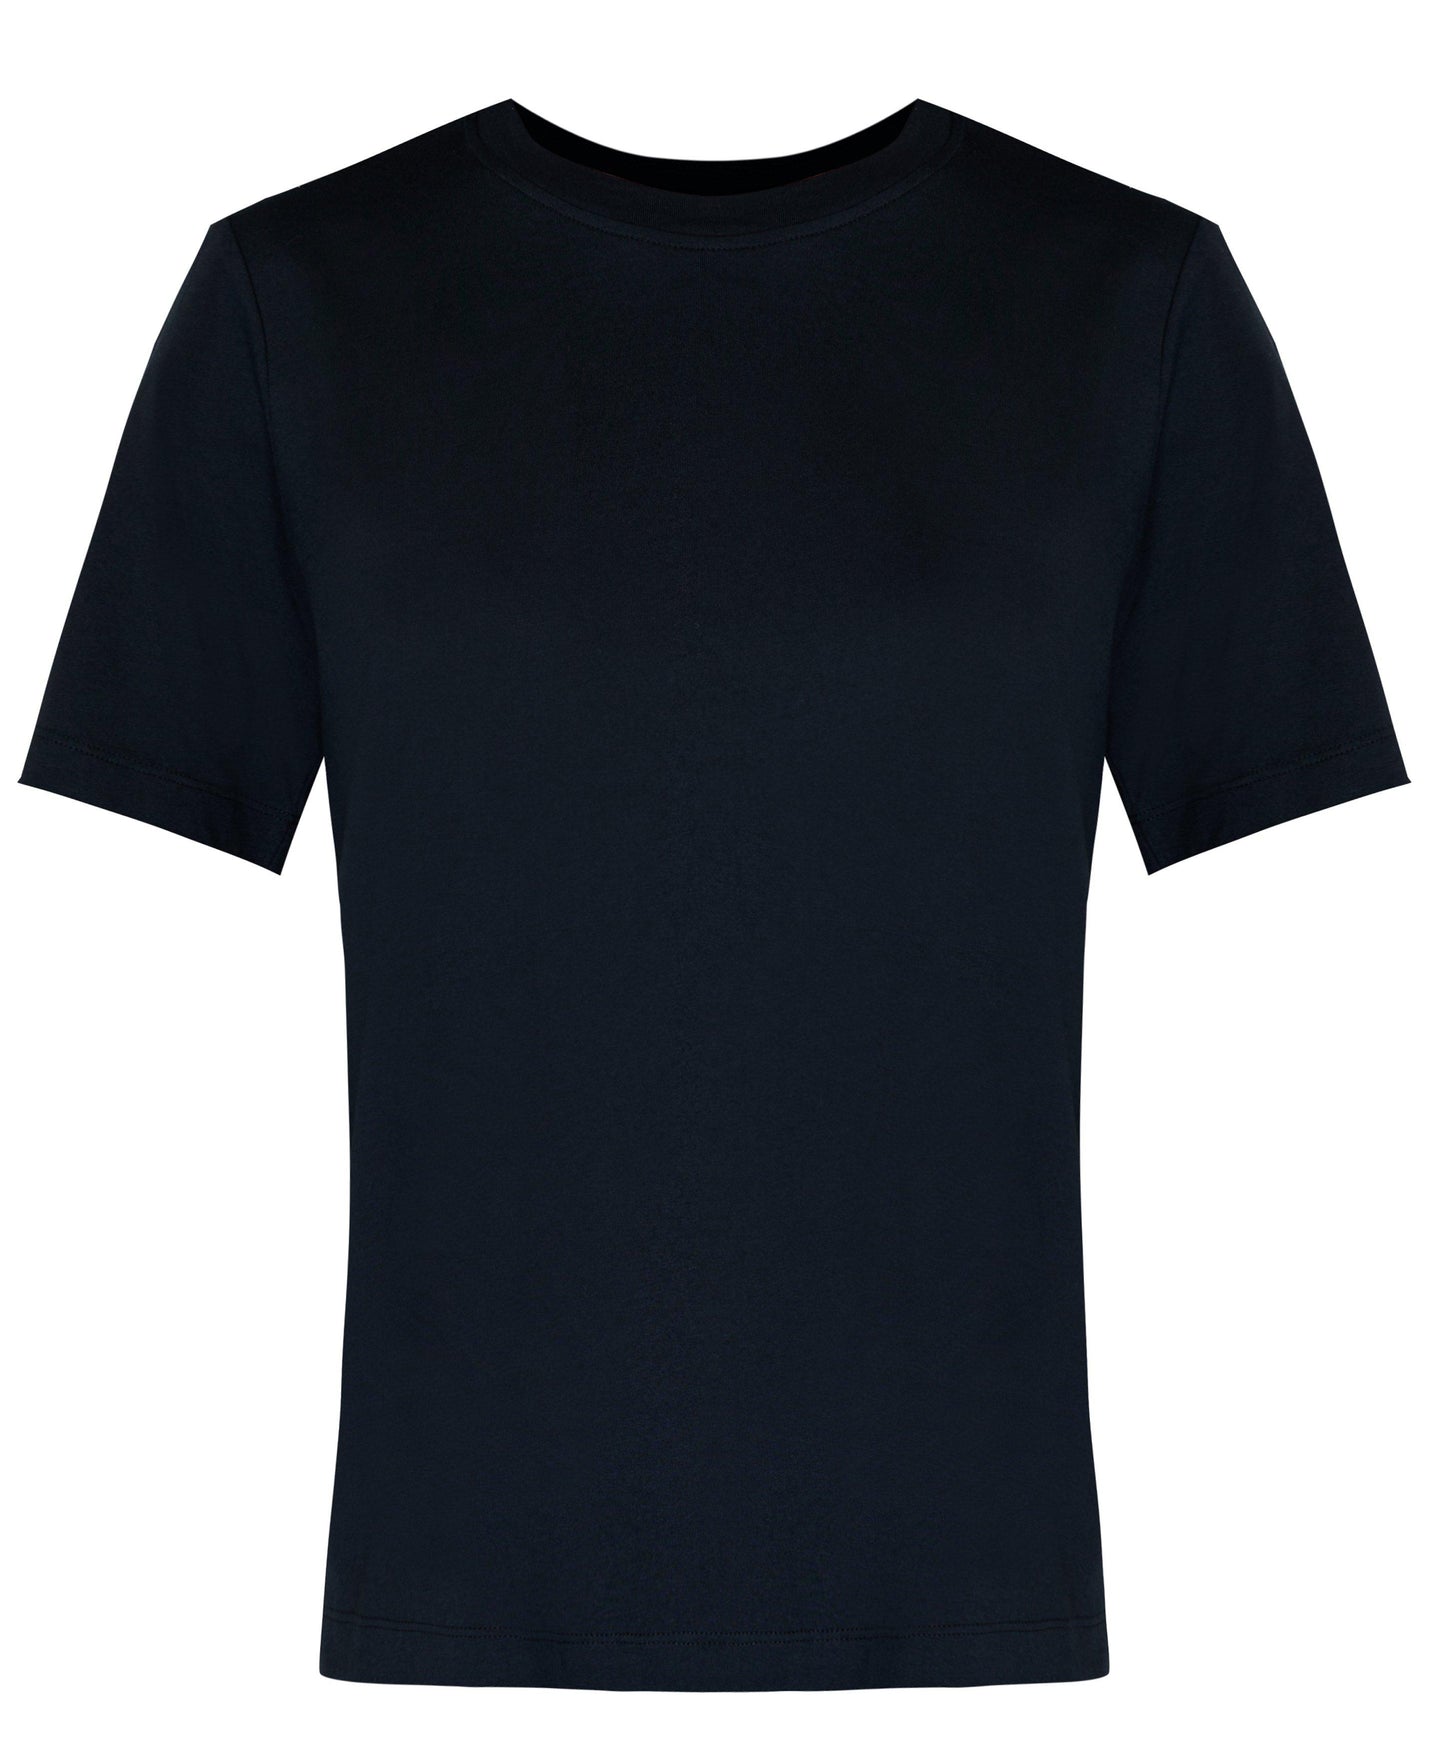 Essential Crew Neck T-shirt Sb9687 Black